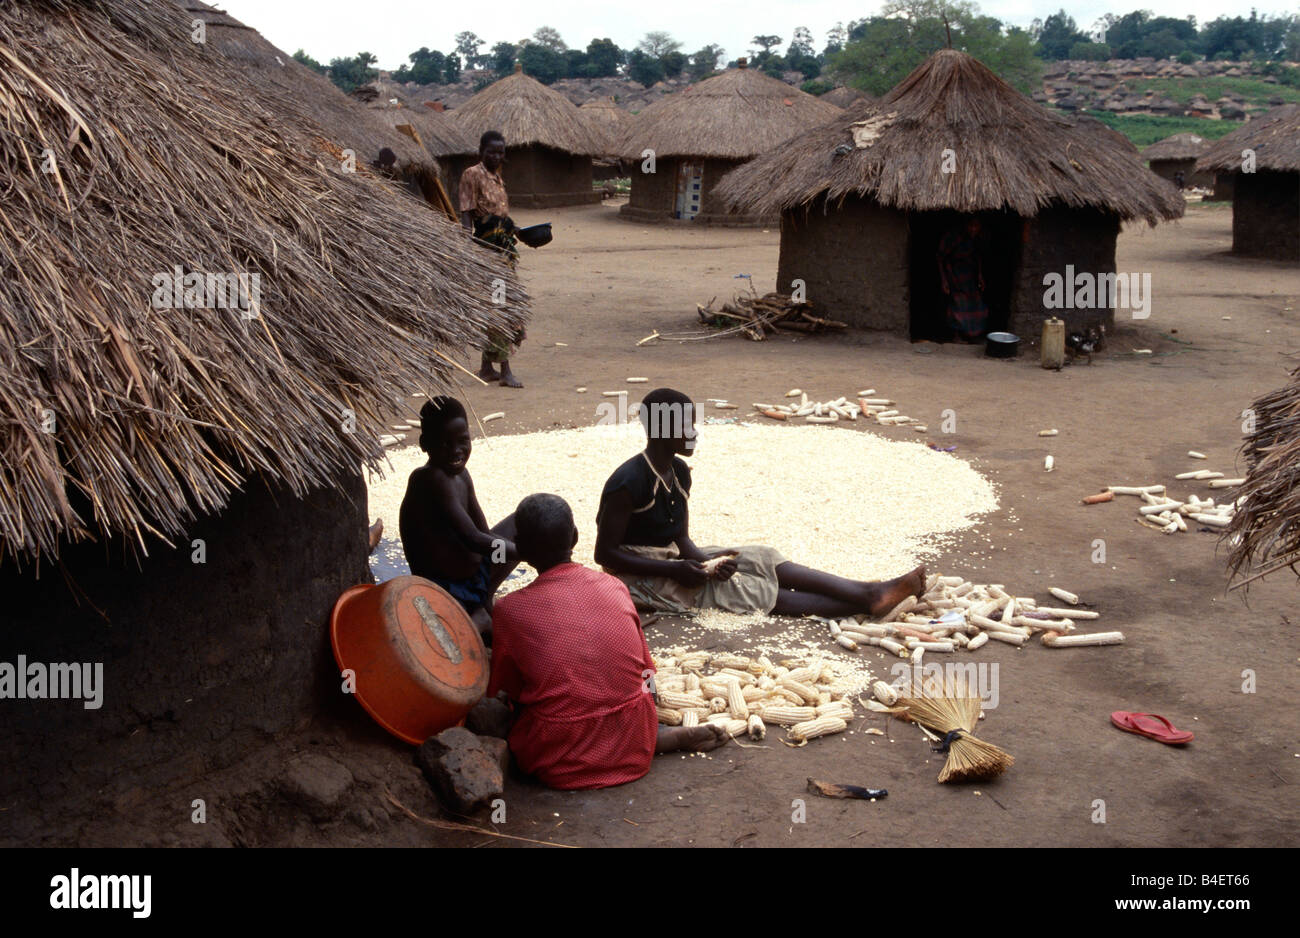 Scene at a village in northern Uganda. Stock Photo